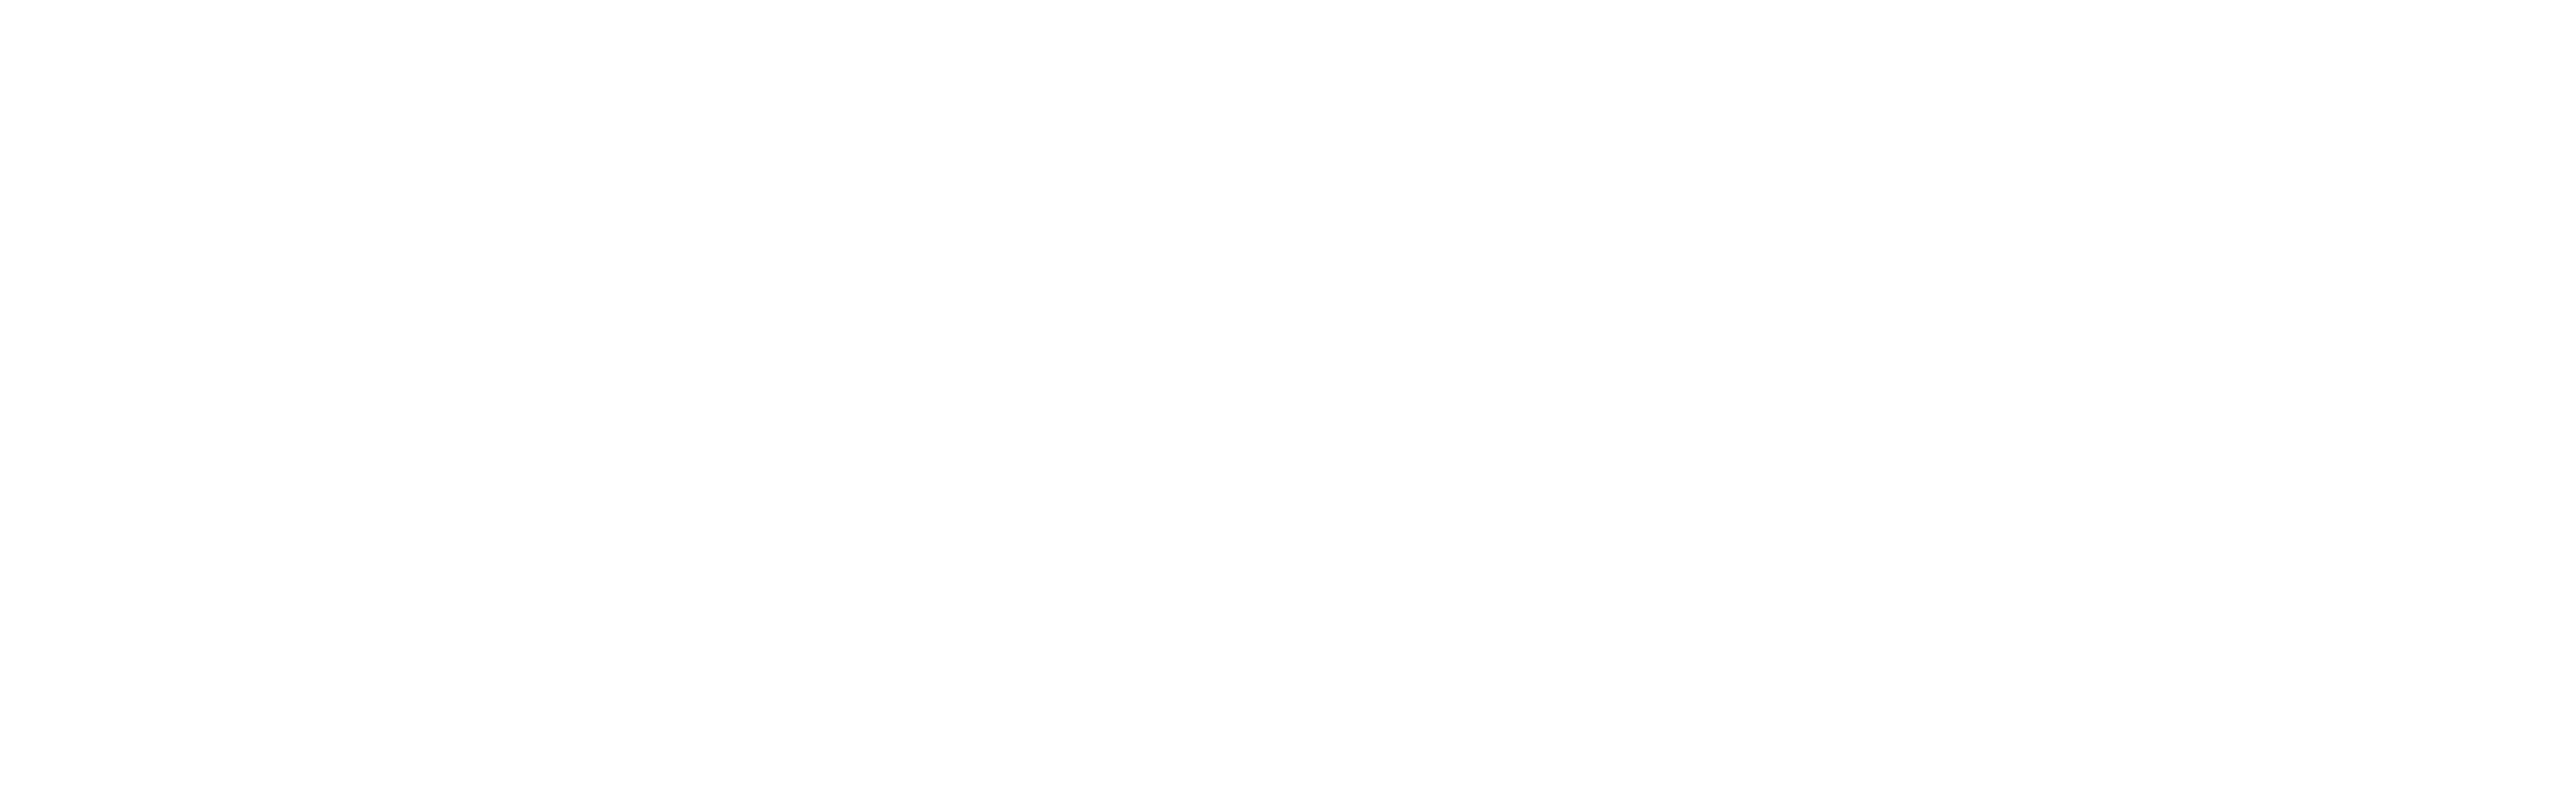 logo putih eskayvie indonesia